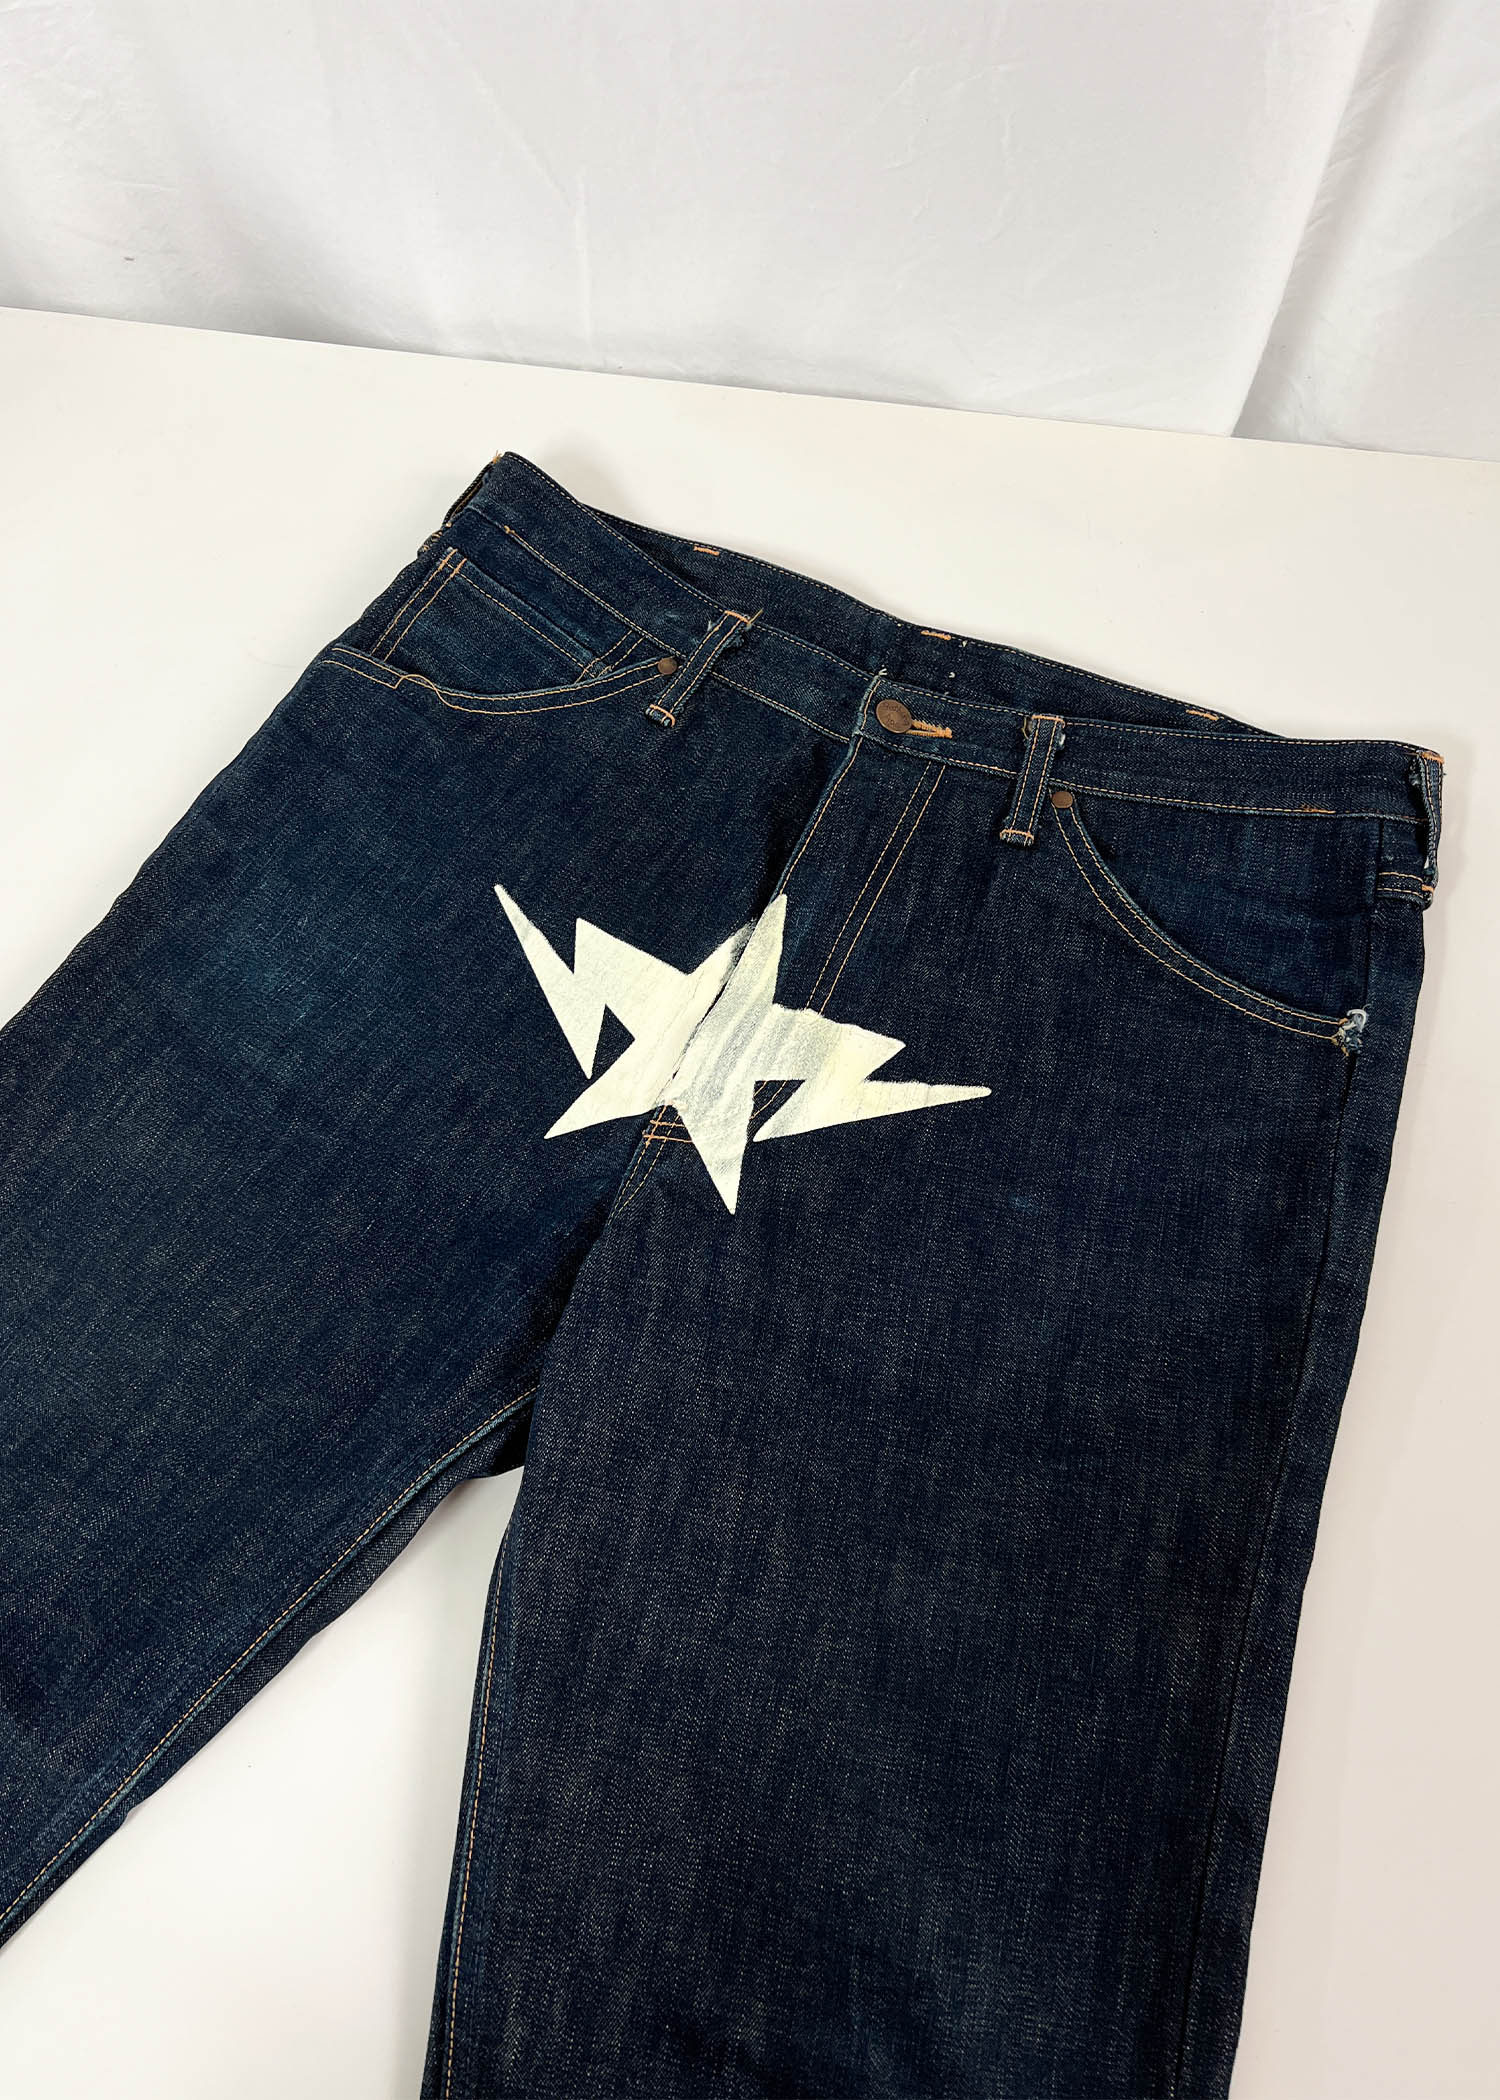 BAPE star printing pants